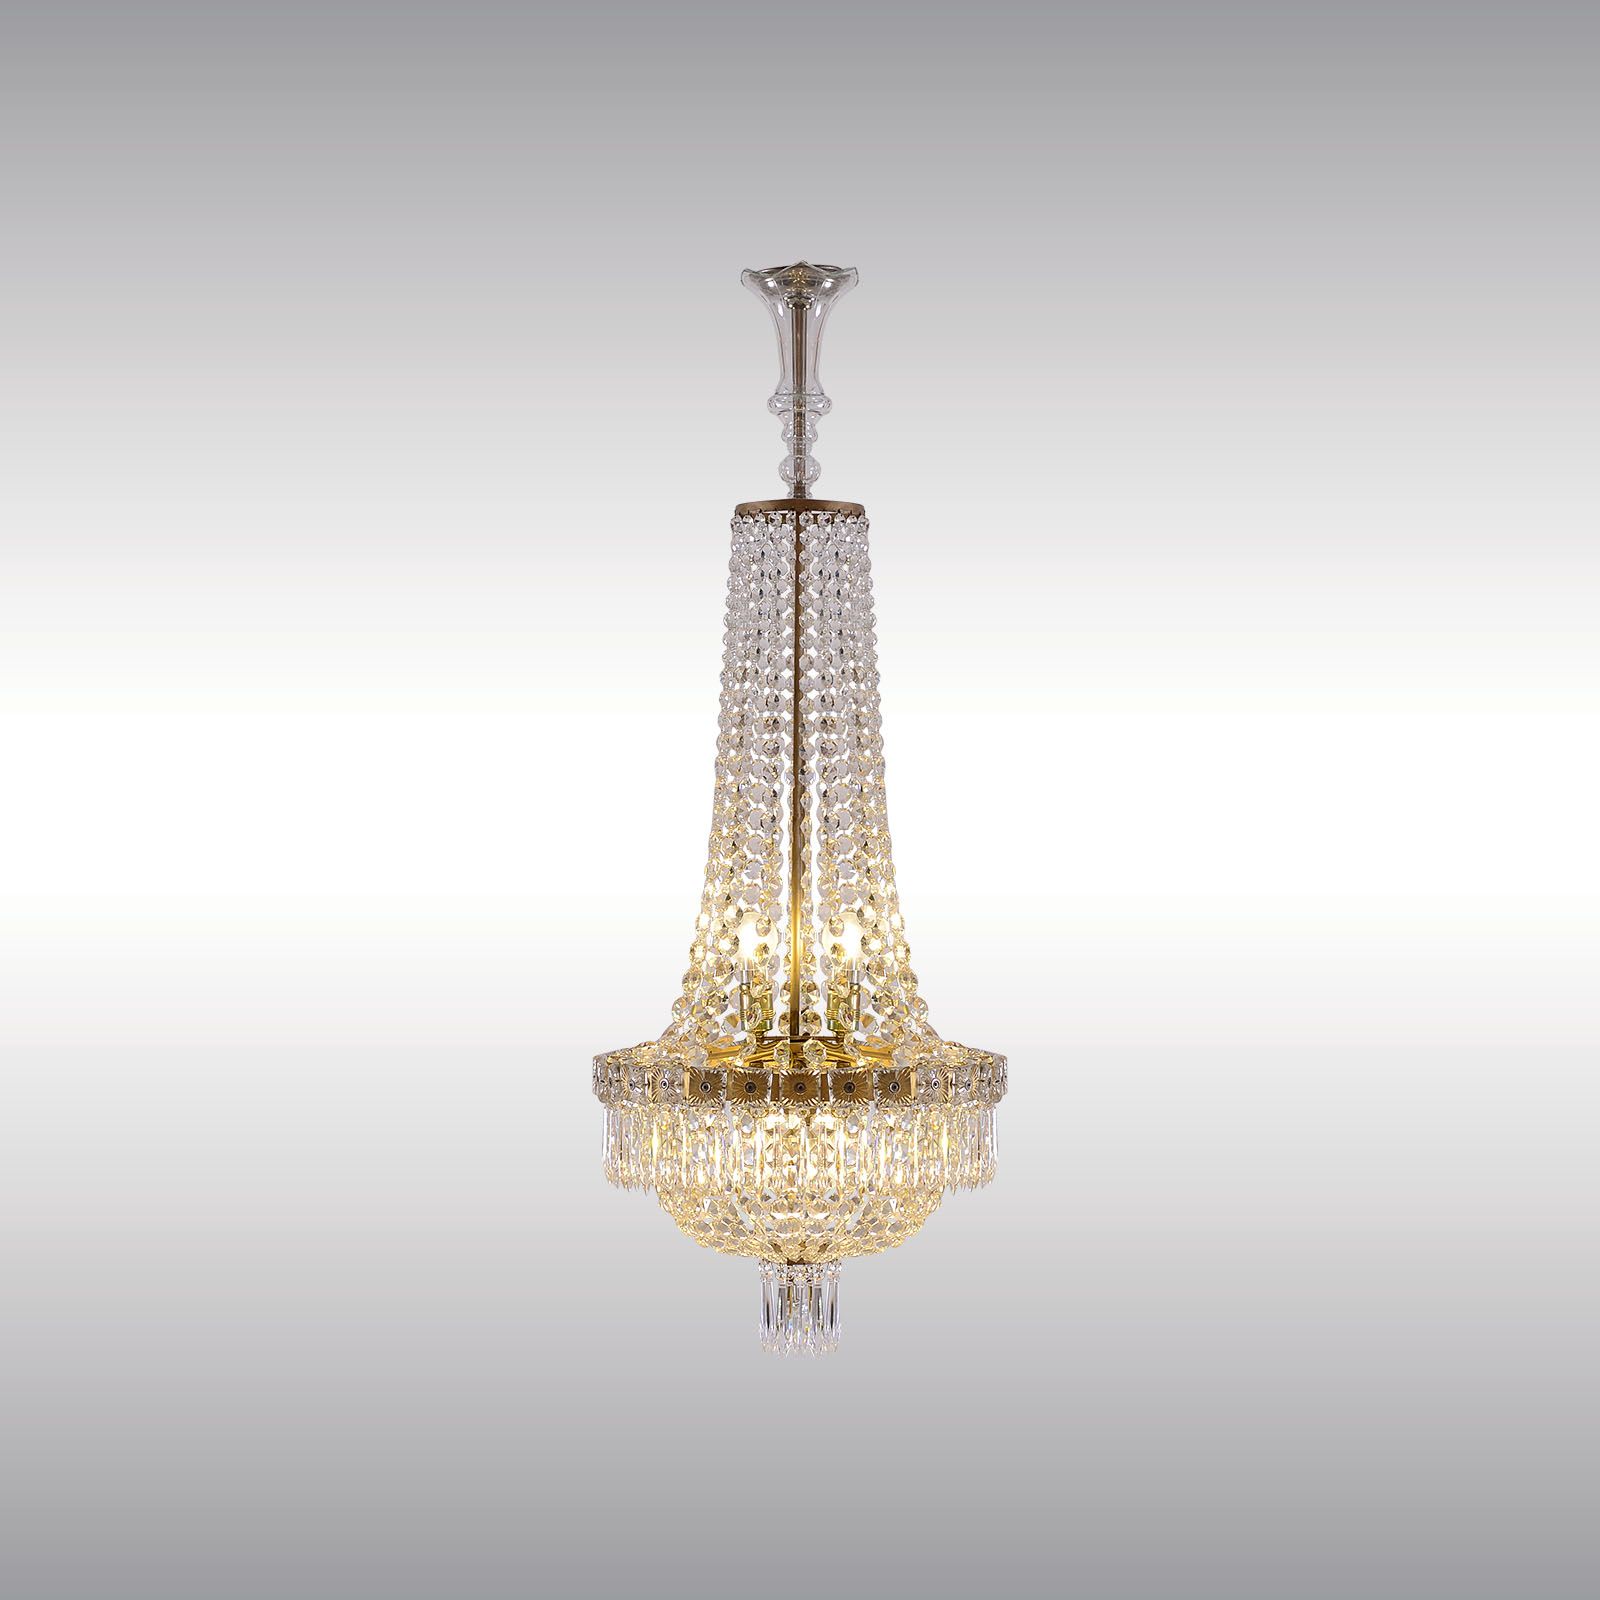 WOKA LAMPS VIENNA - OrderNr.: 60022|Salonluster im Empire-Stil - Design: Austrian Mastercraft